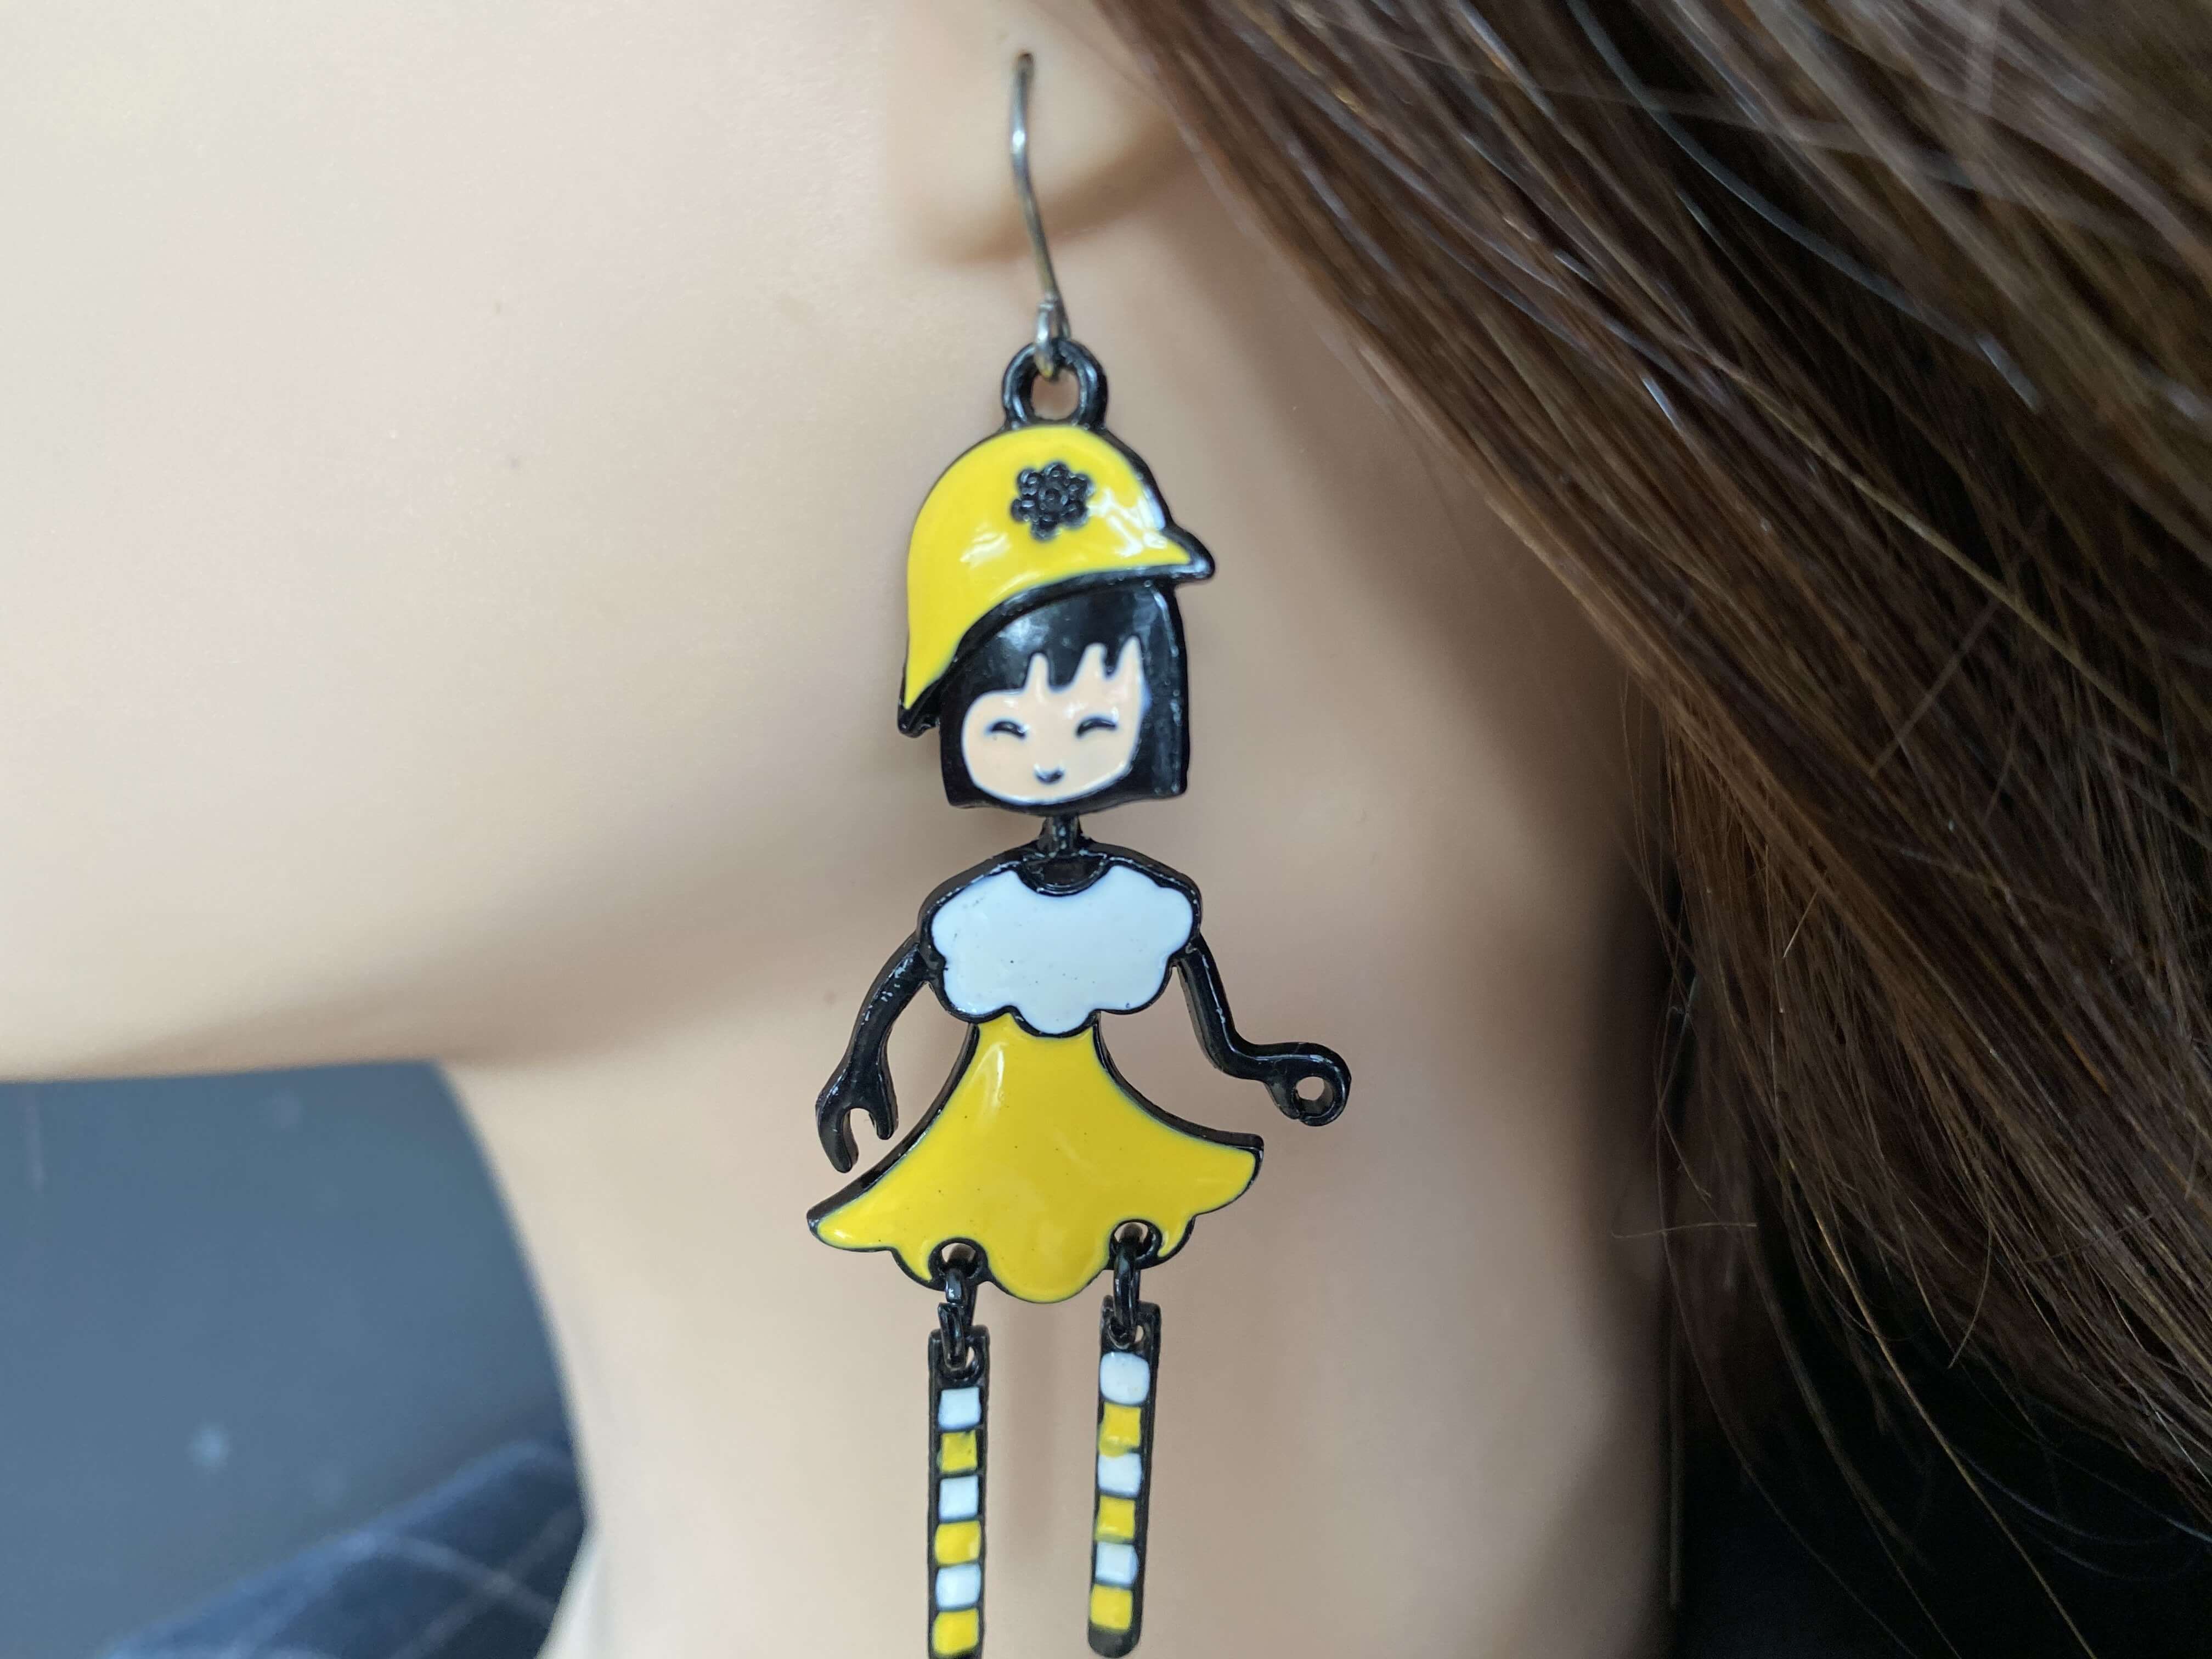 Harajuku Girl yellow on ear